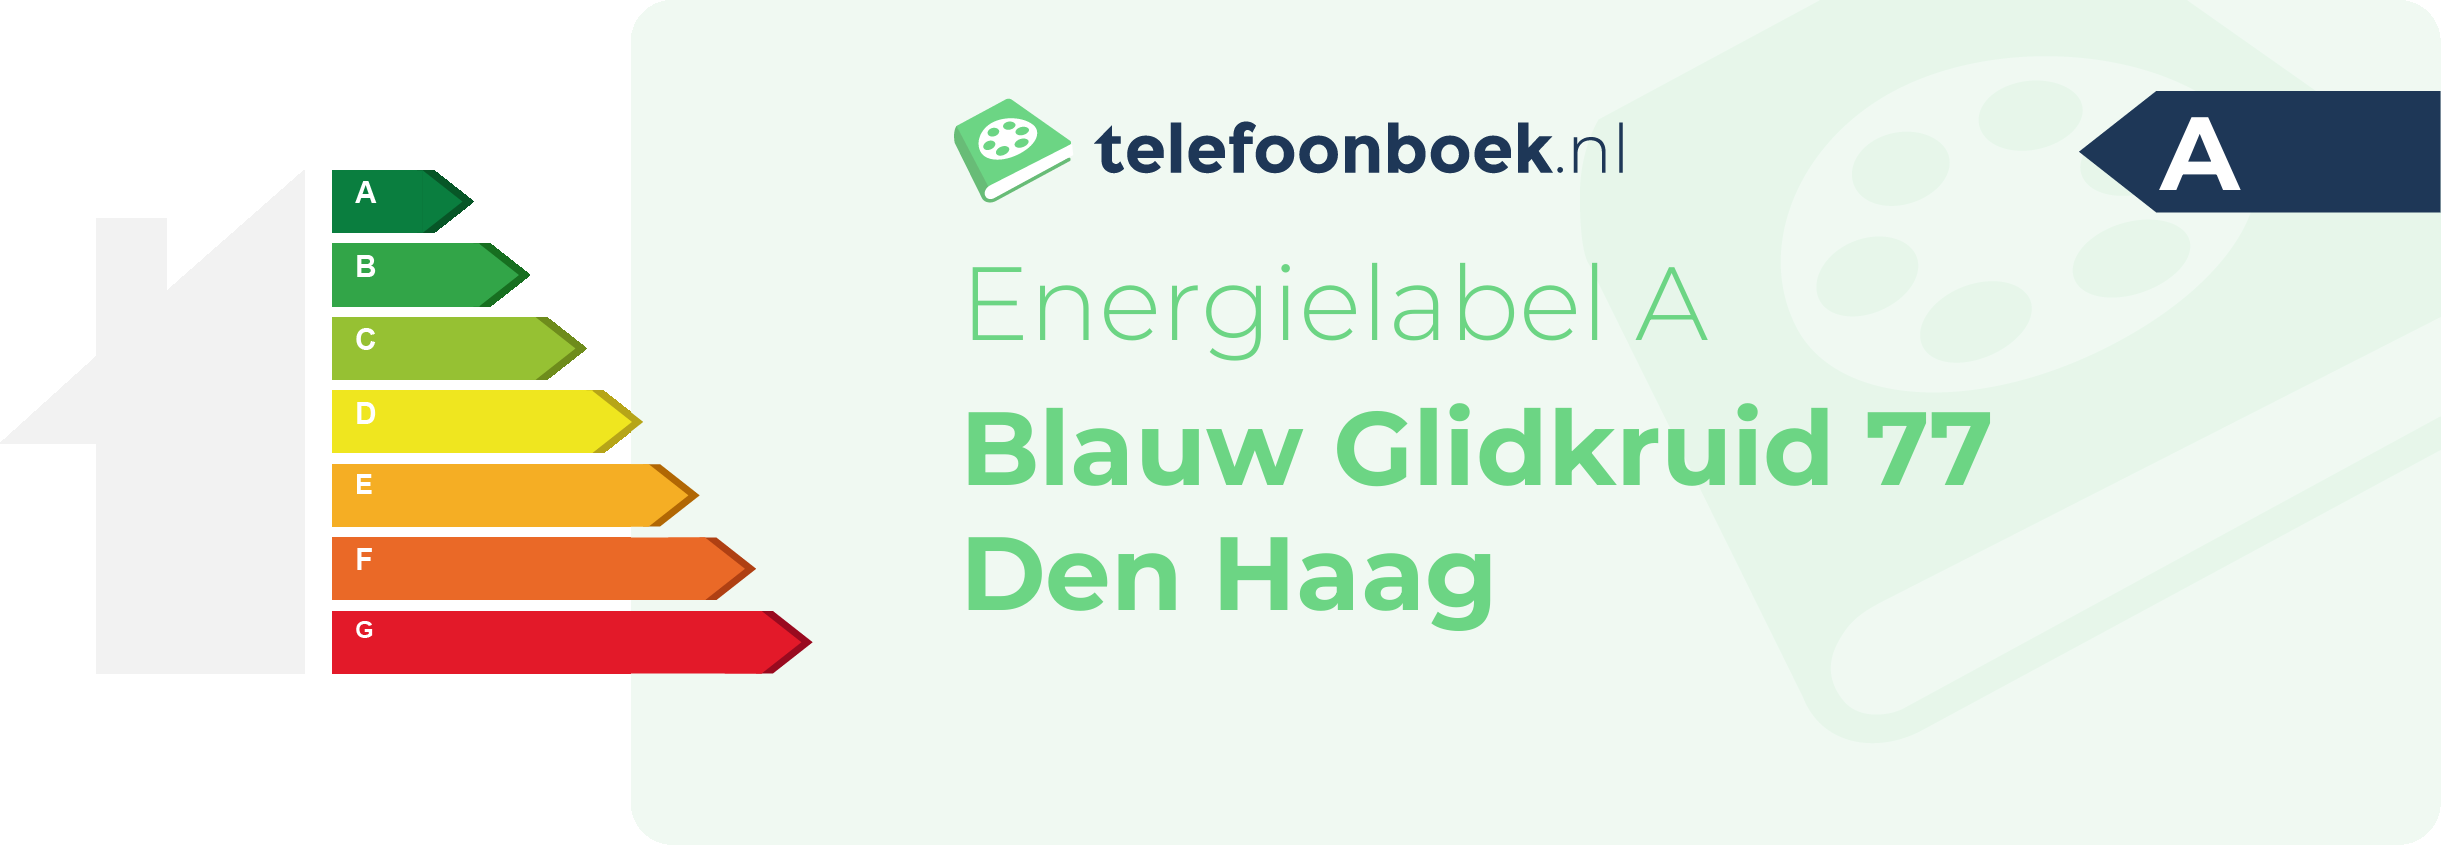 Energielabel Blauw Glidkruid 77 Den Haag